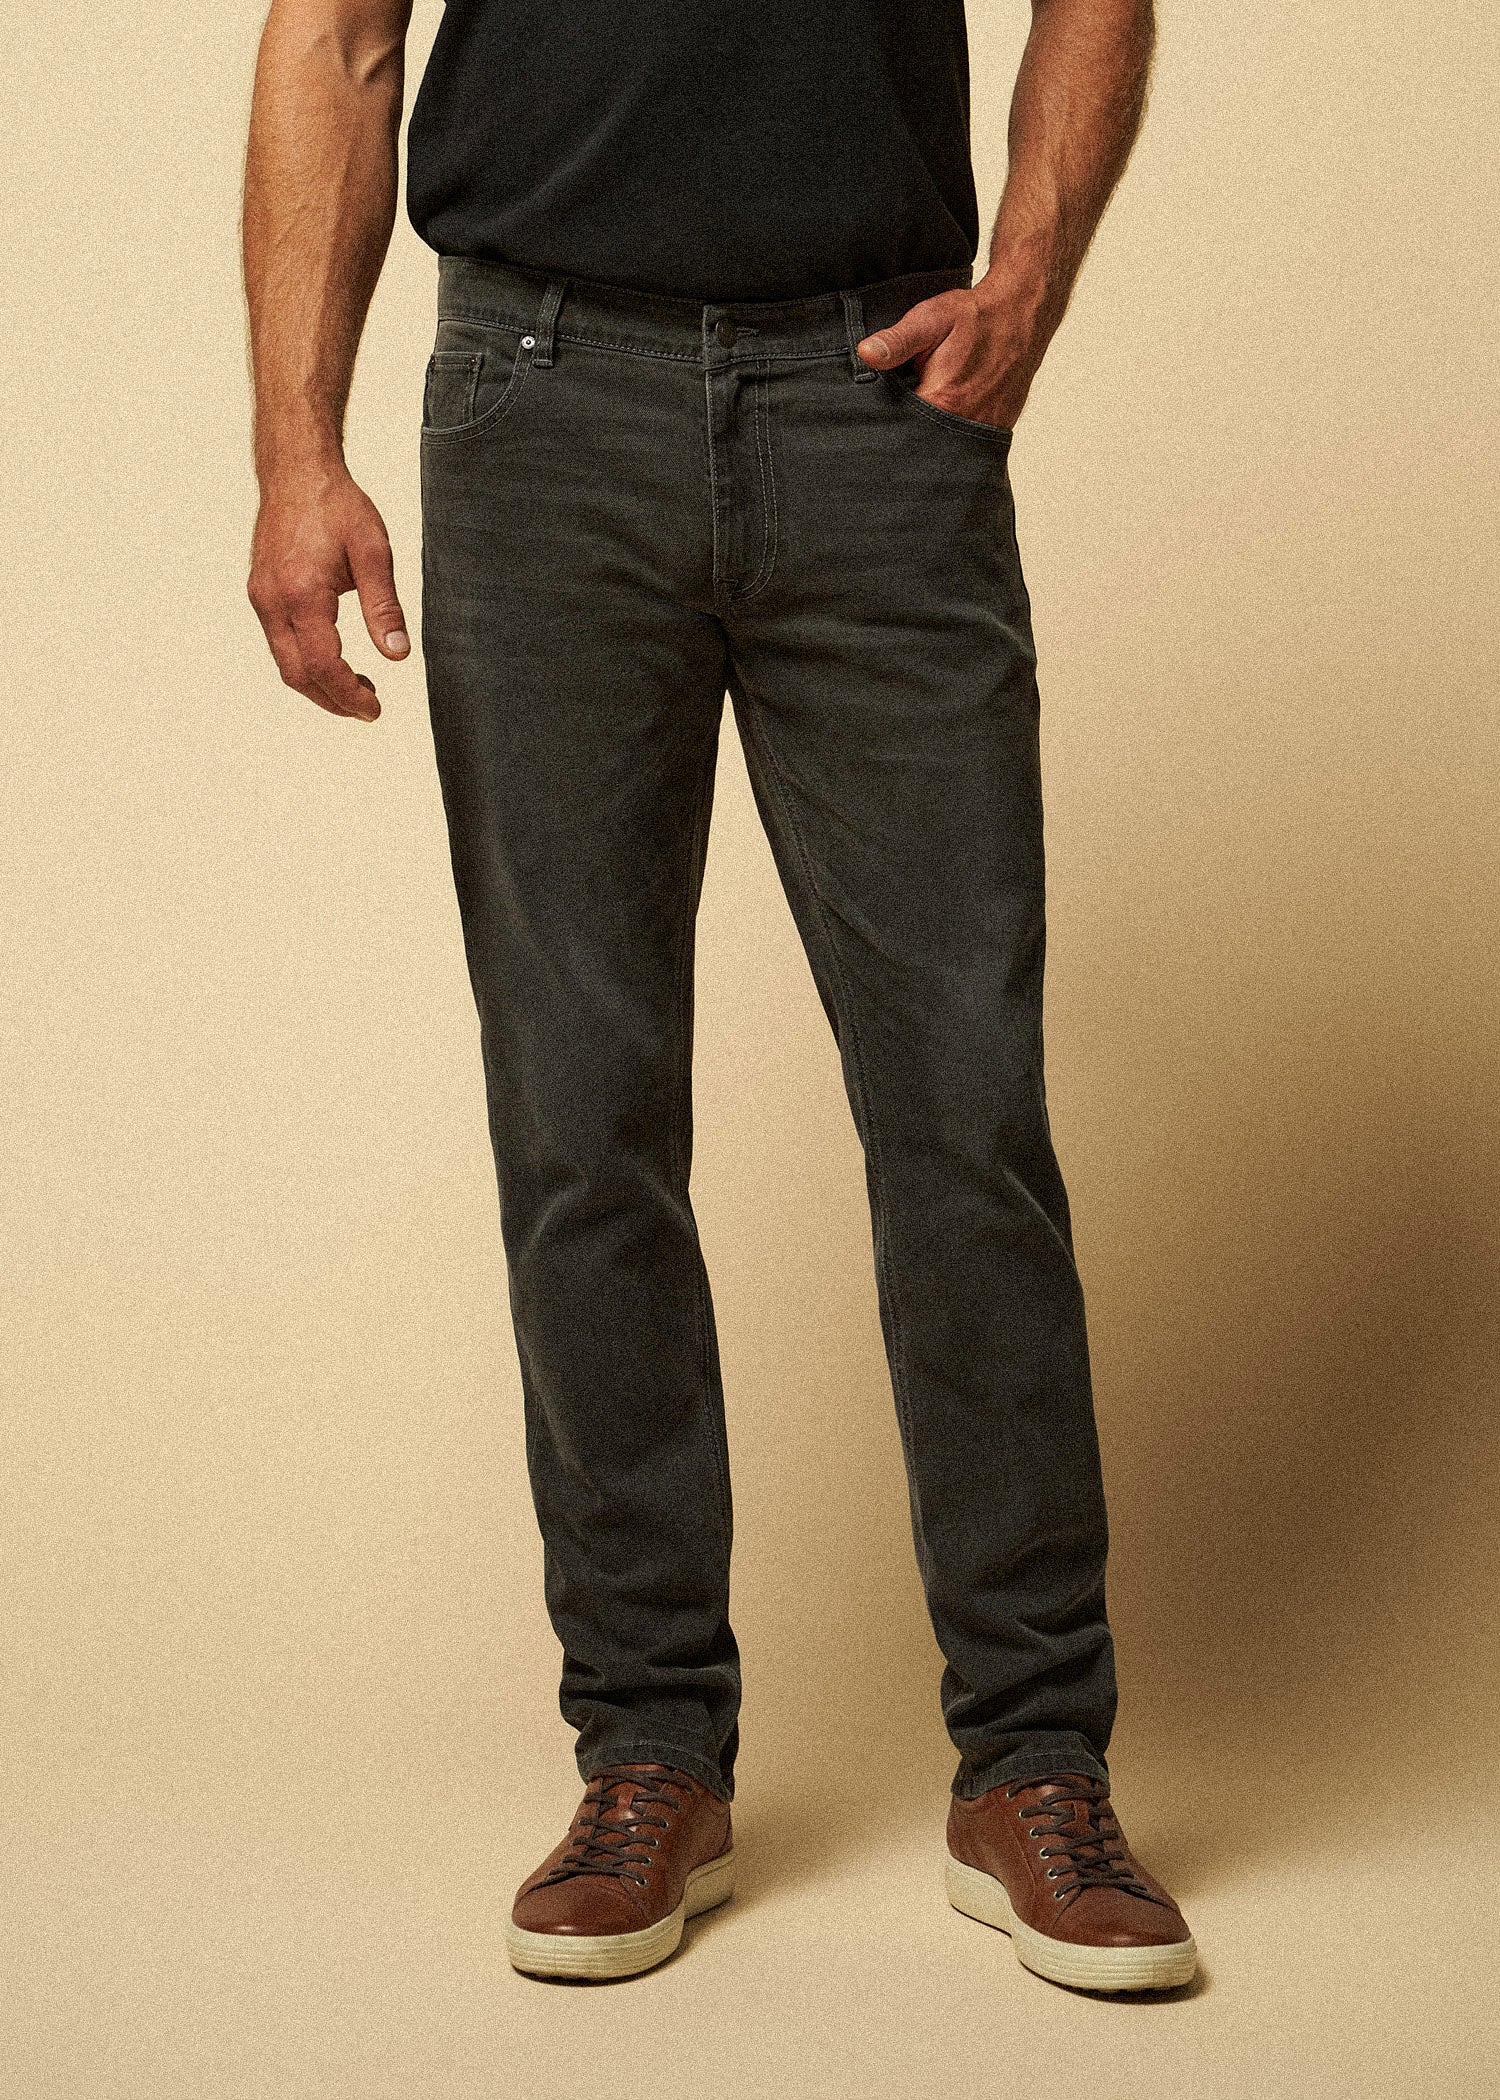    LJ-Men-Slim-Taper-Fit-Carman-Jeans-Industrial-Grey-front